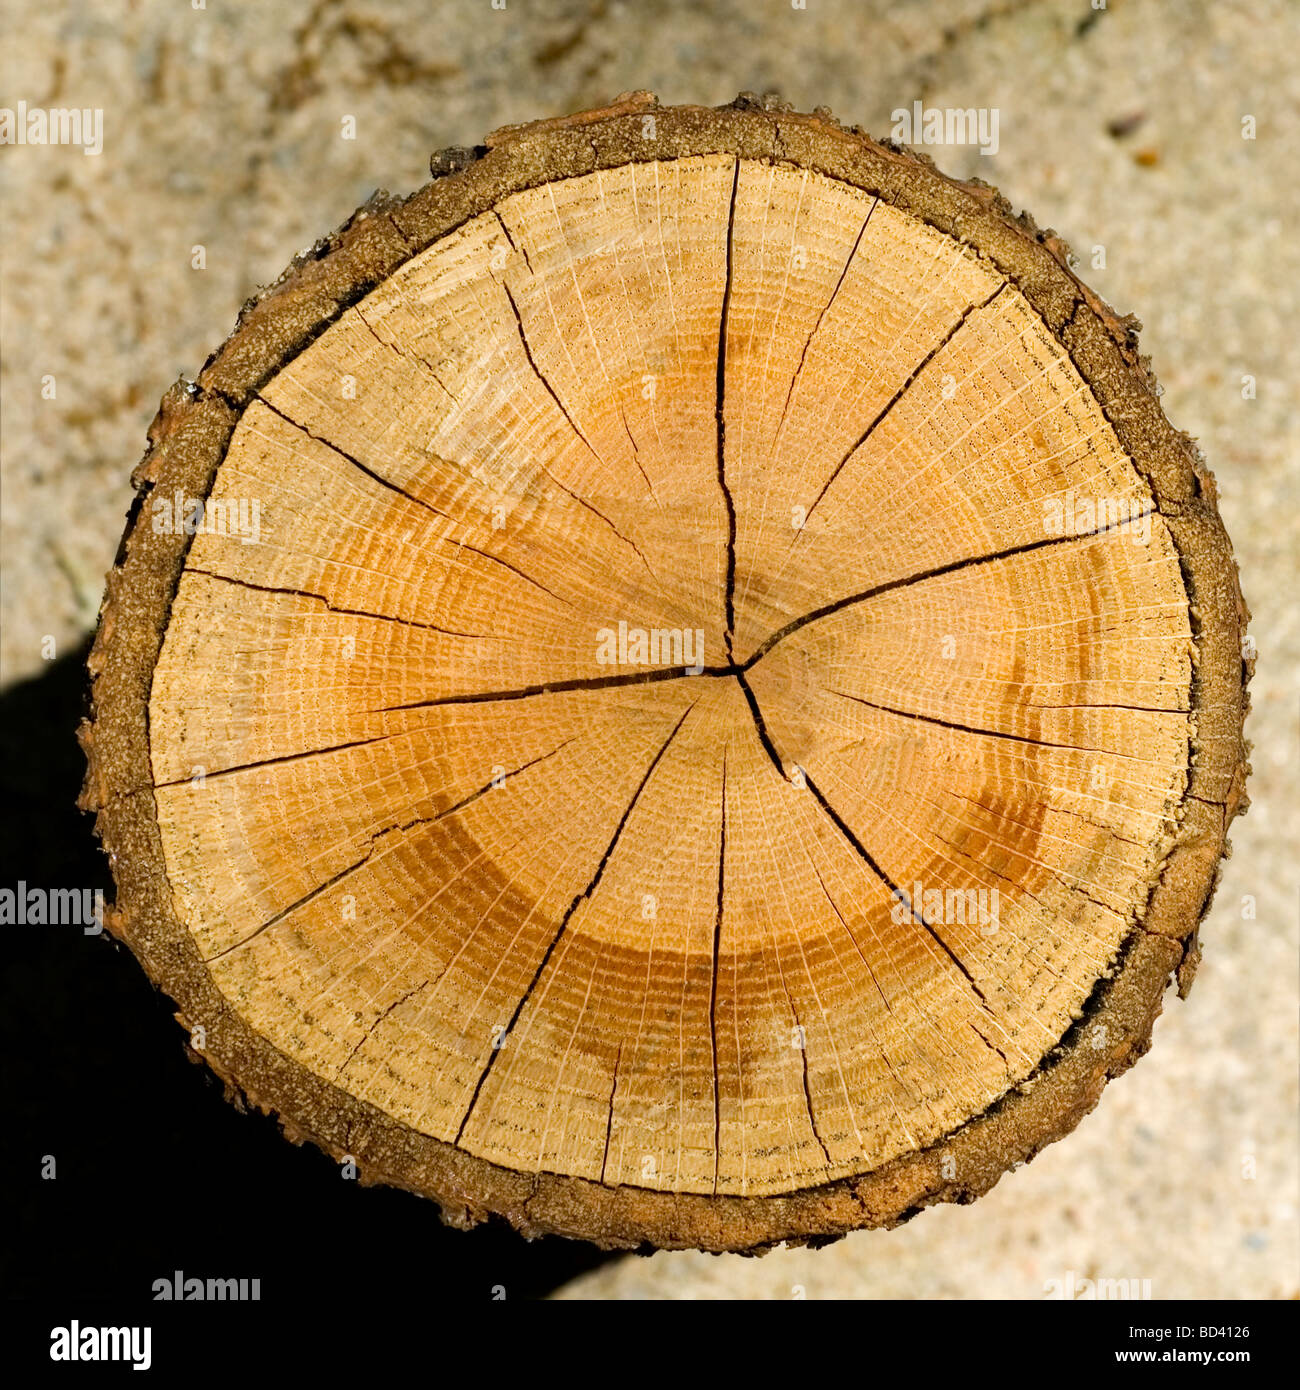 Log, Woodgrain Hintergrundtextur geschnitten Stockfoto